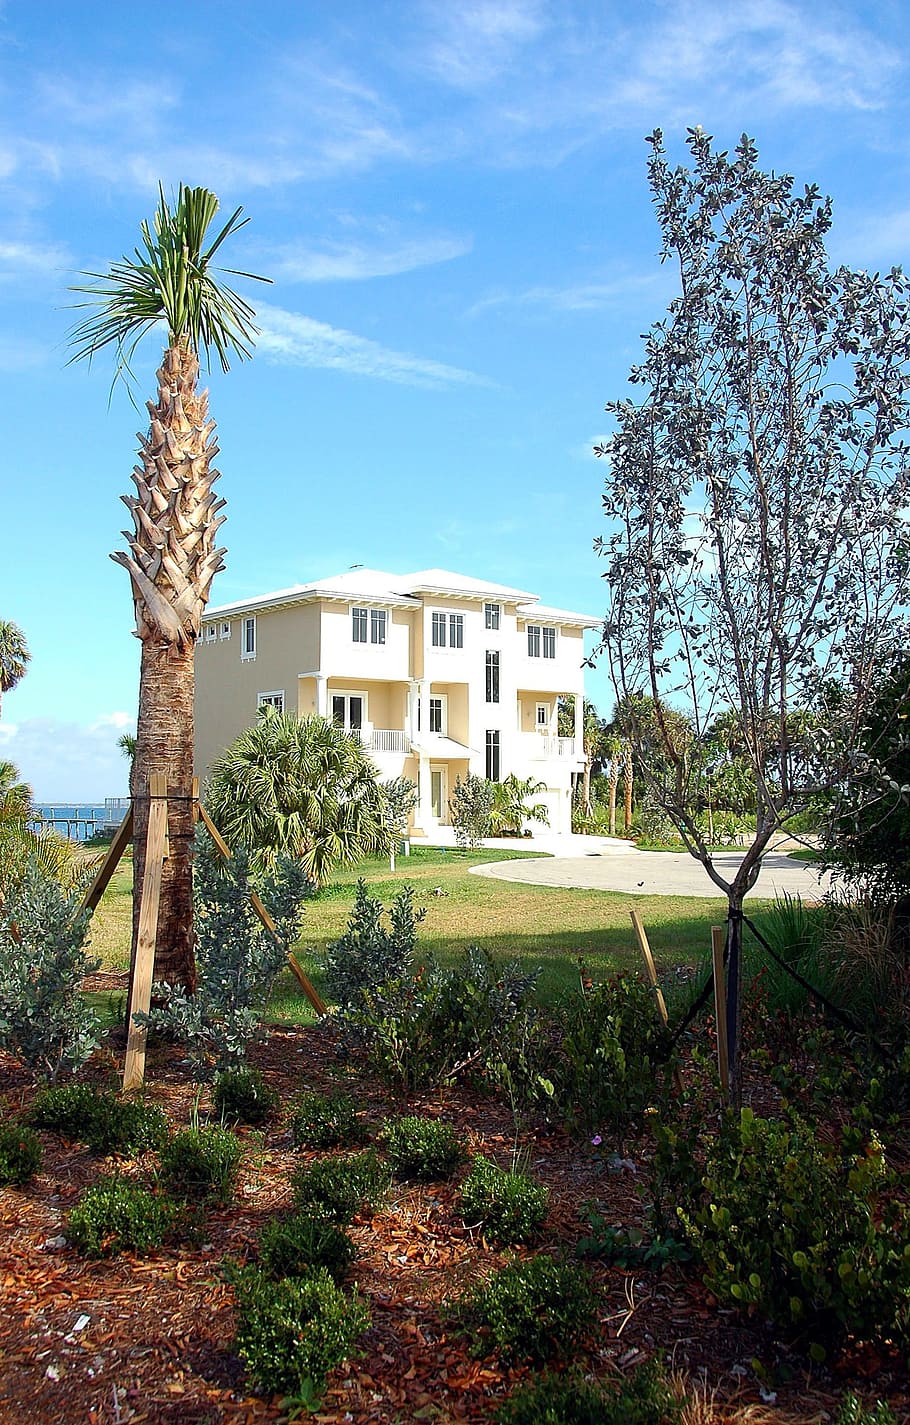 Beach, Home, Florida, Tropical, beach home, palm trees, landscape, luxury, upscale, house